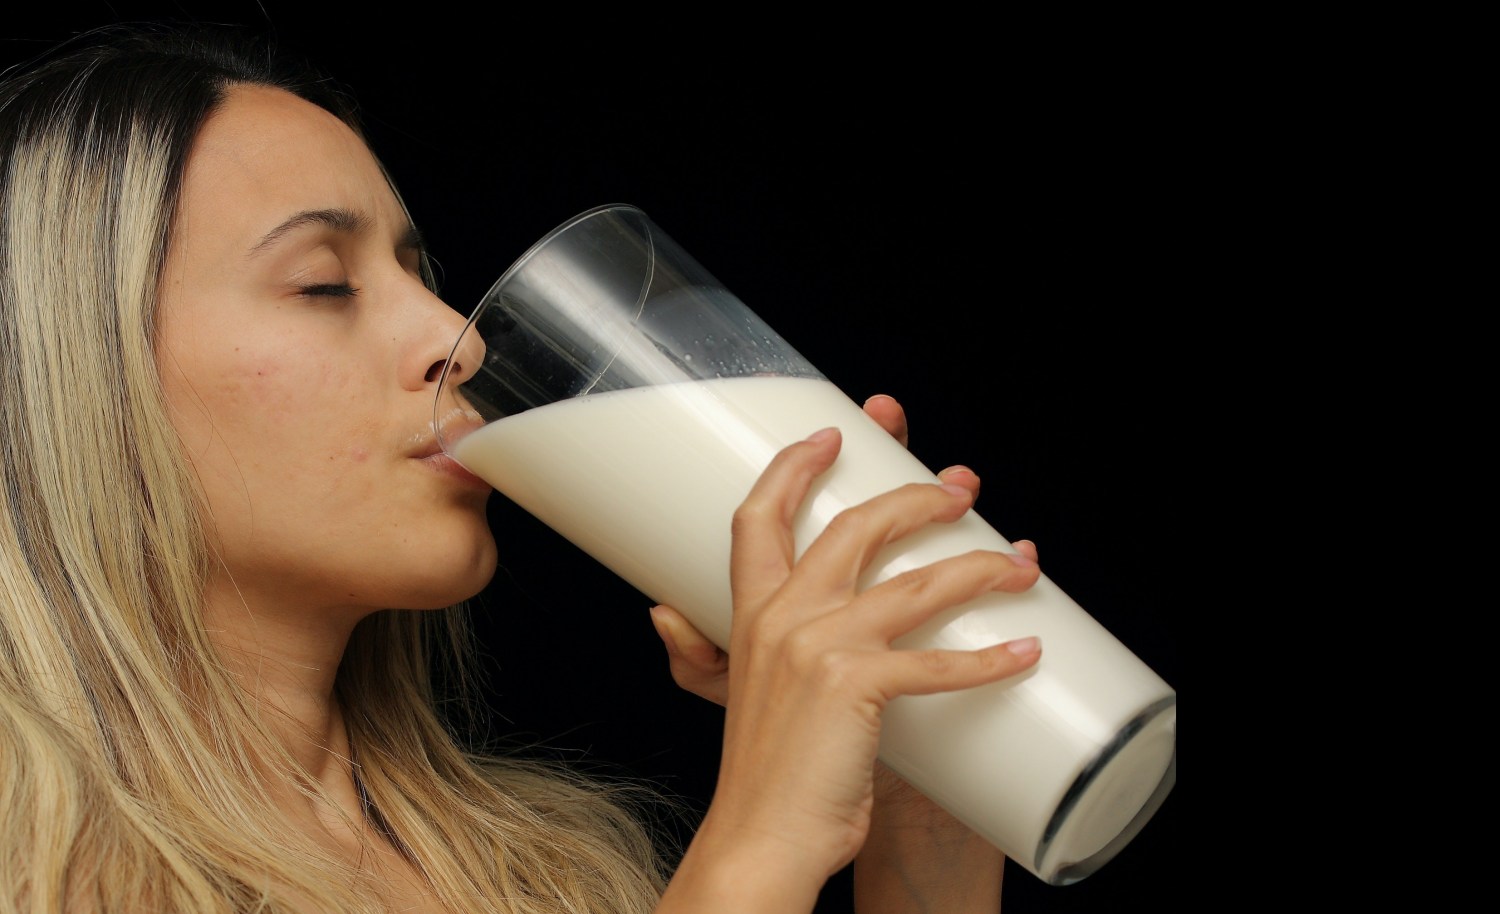 dia mundial do leite